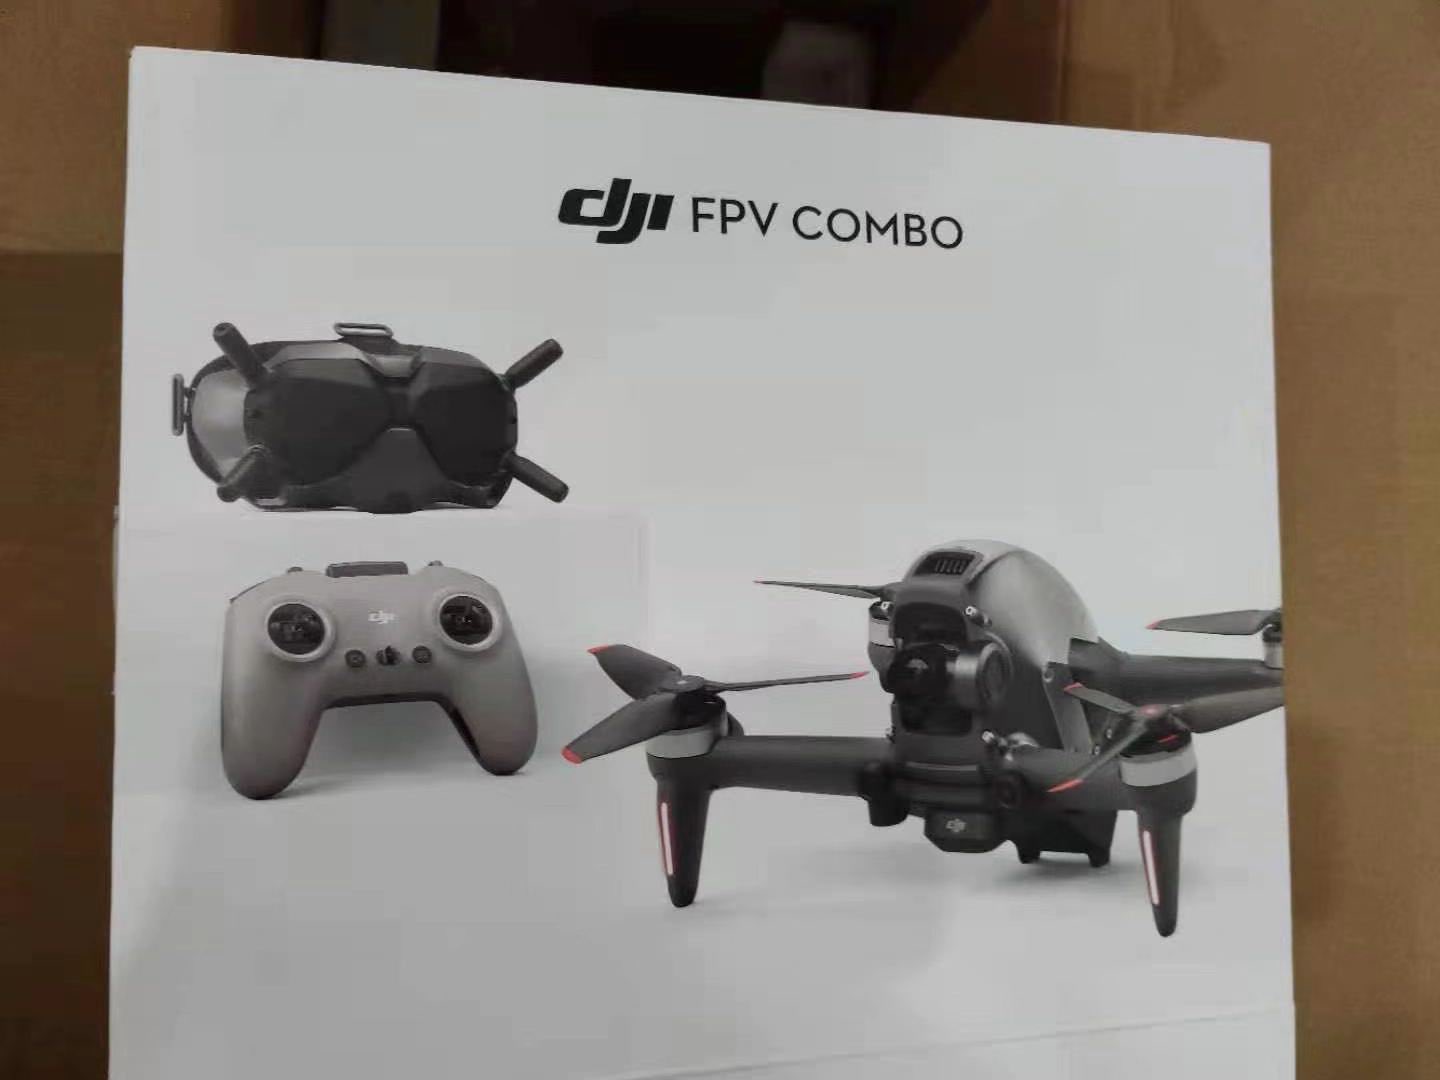 DJI-FPV-combo-drone-rumors-3.jpeg